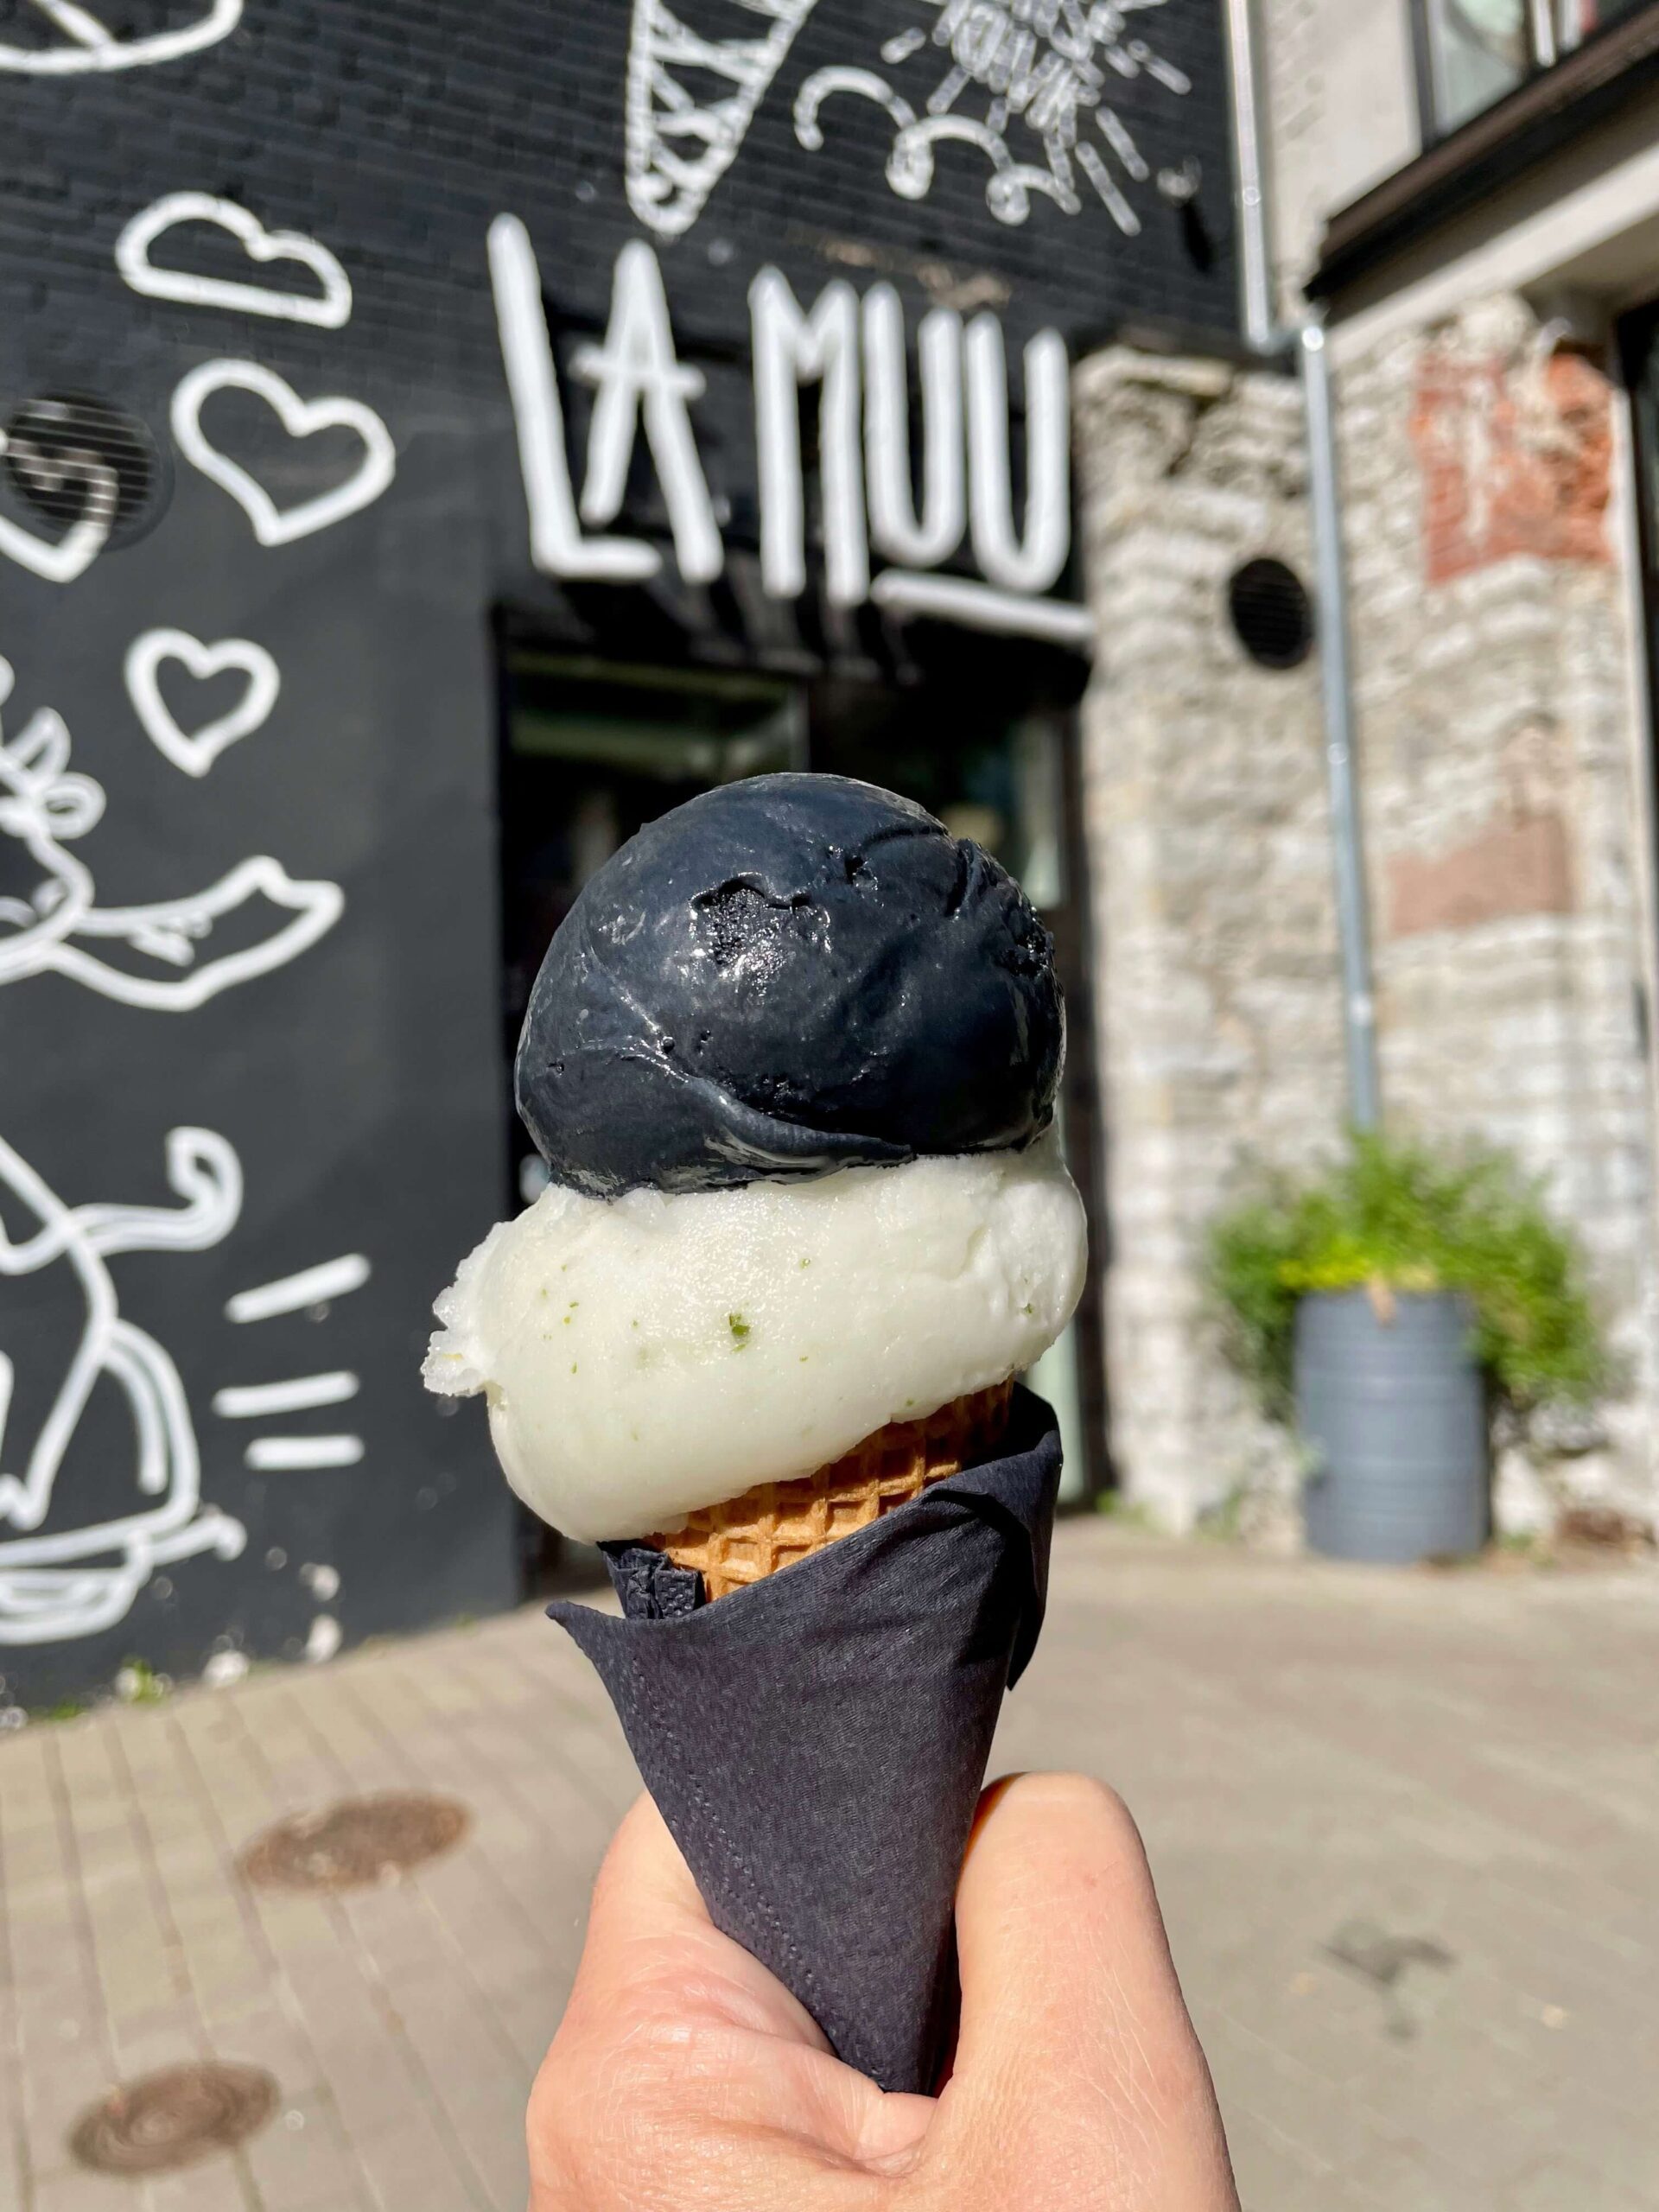 Estonia, Tallinn - La Muu Ice-creams